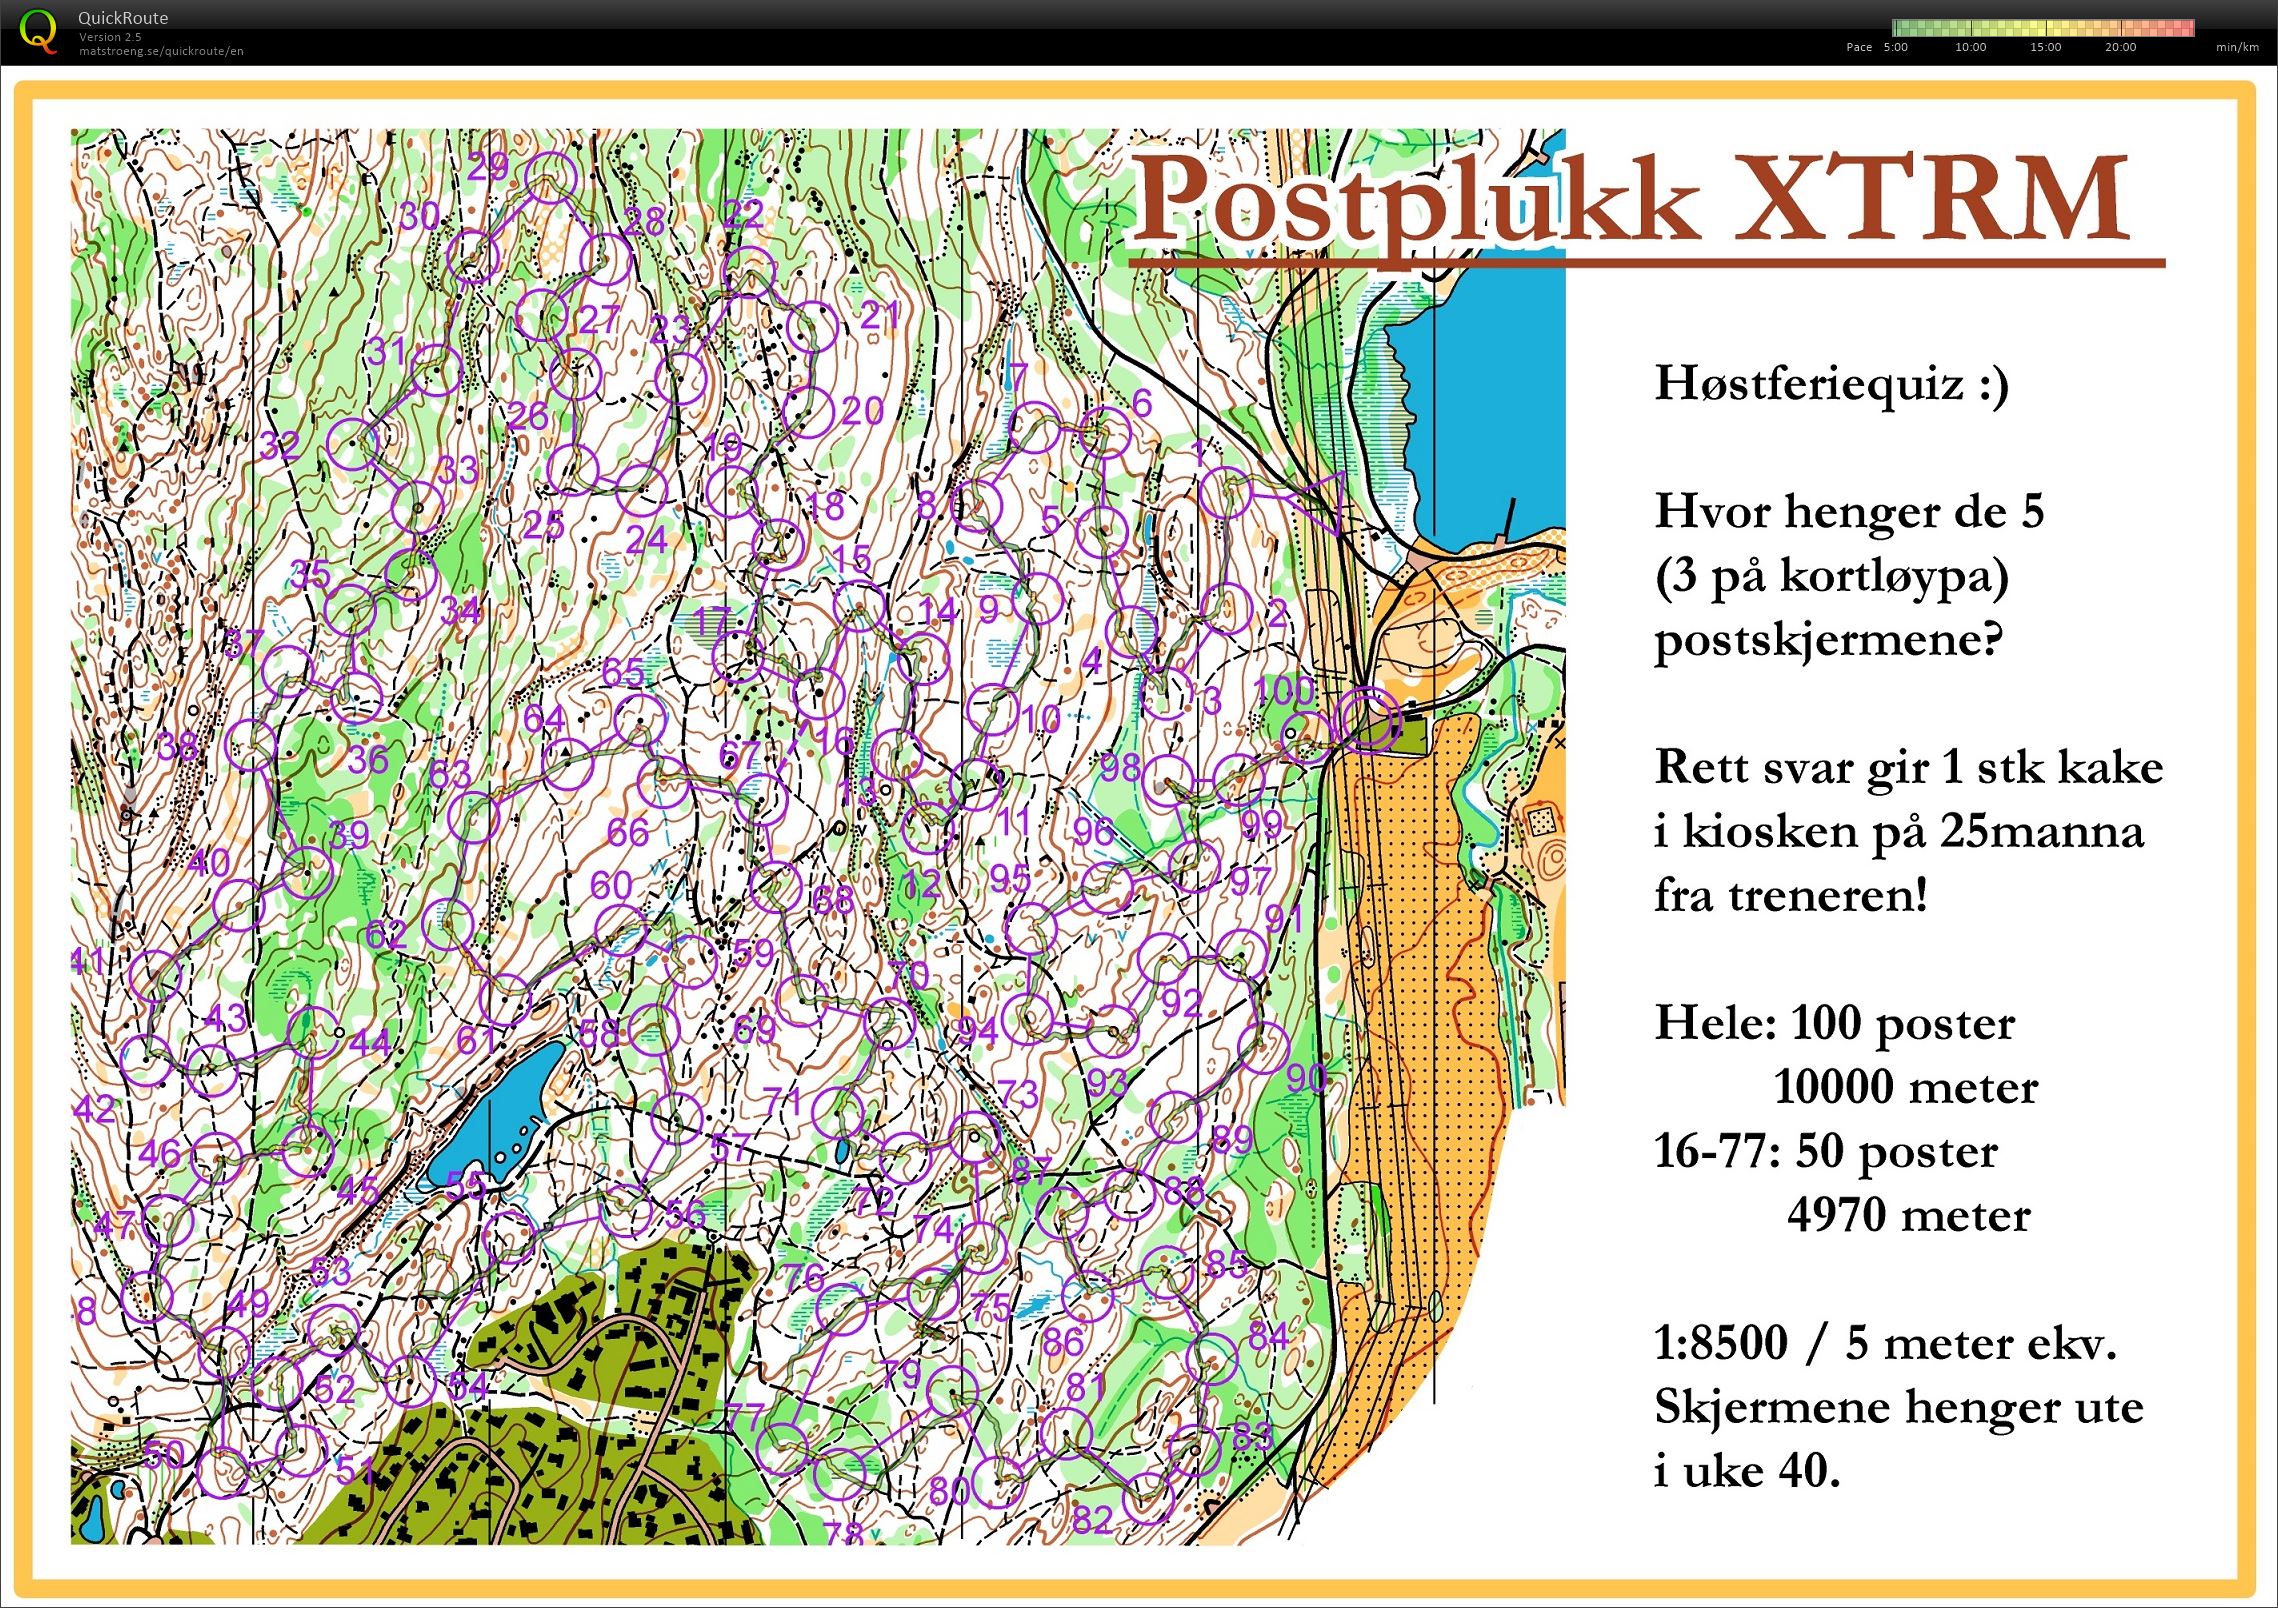 Postplukk XTRM (01/10/2015)